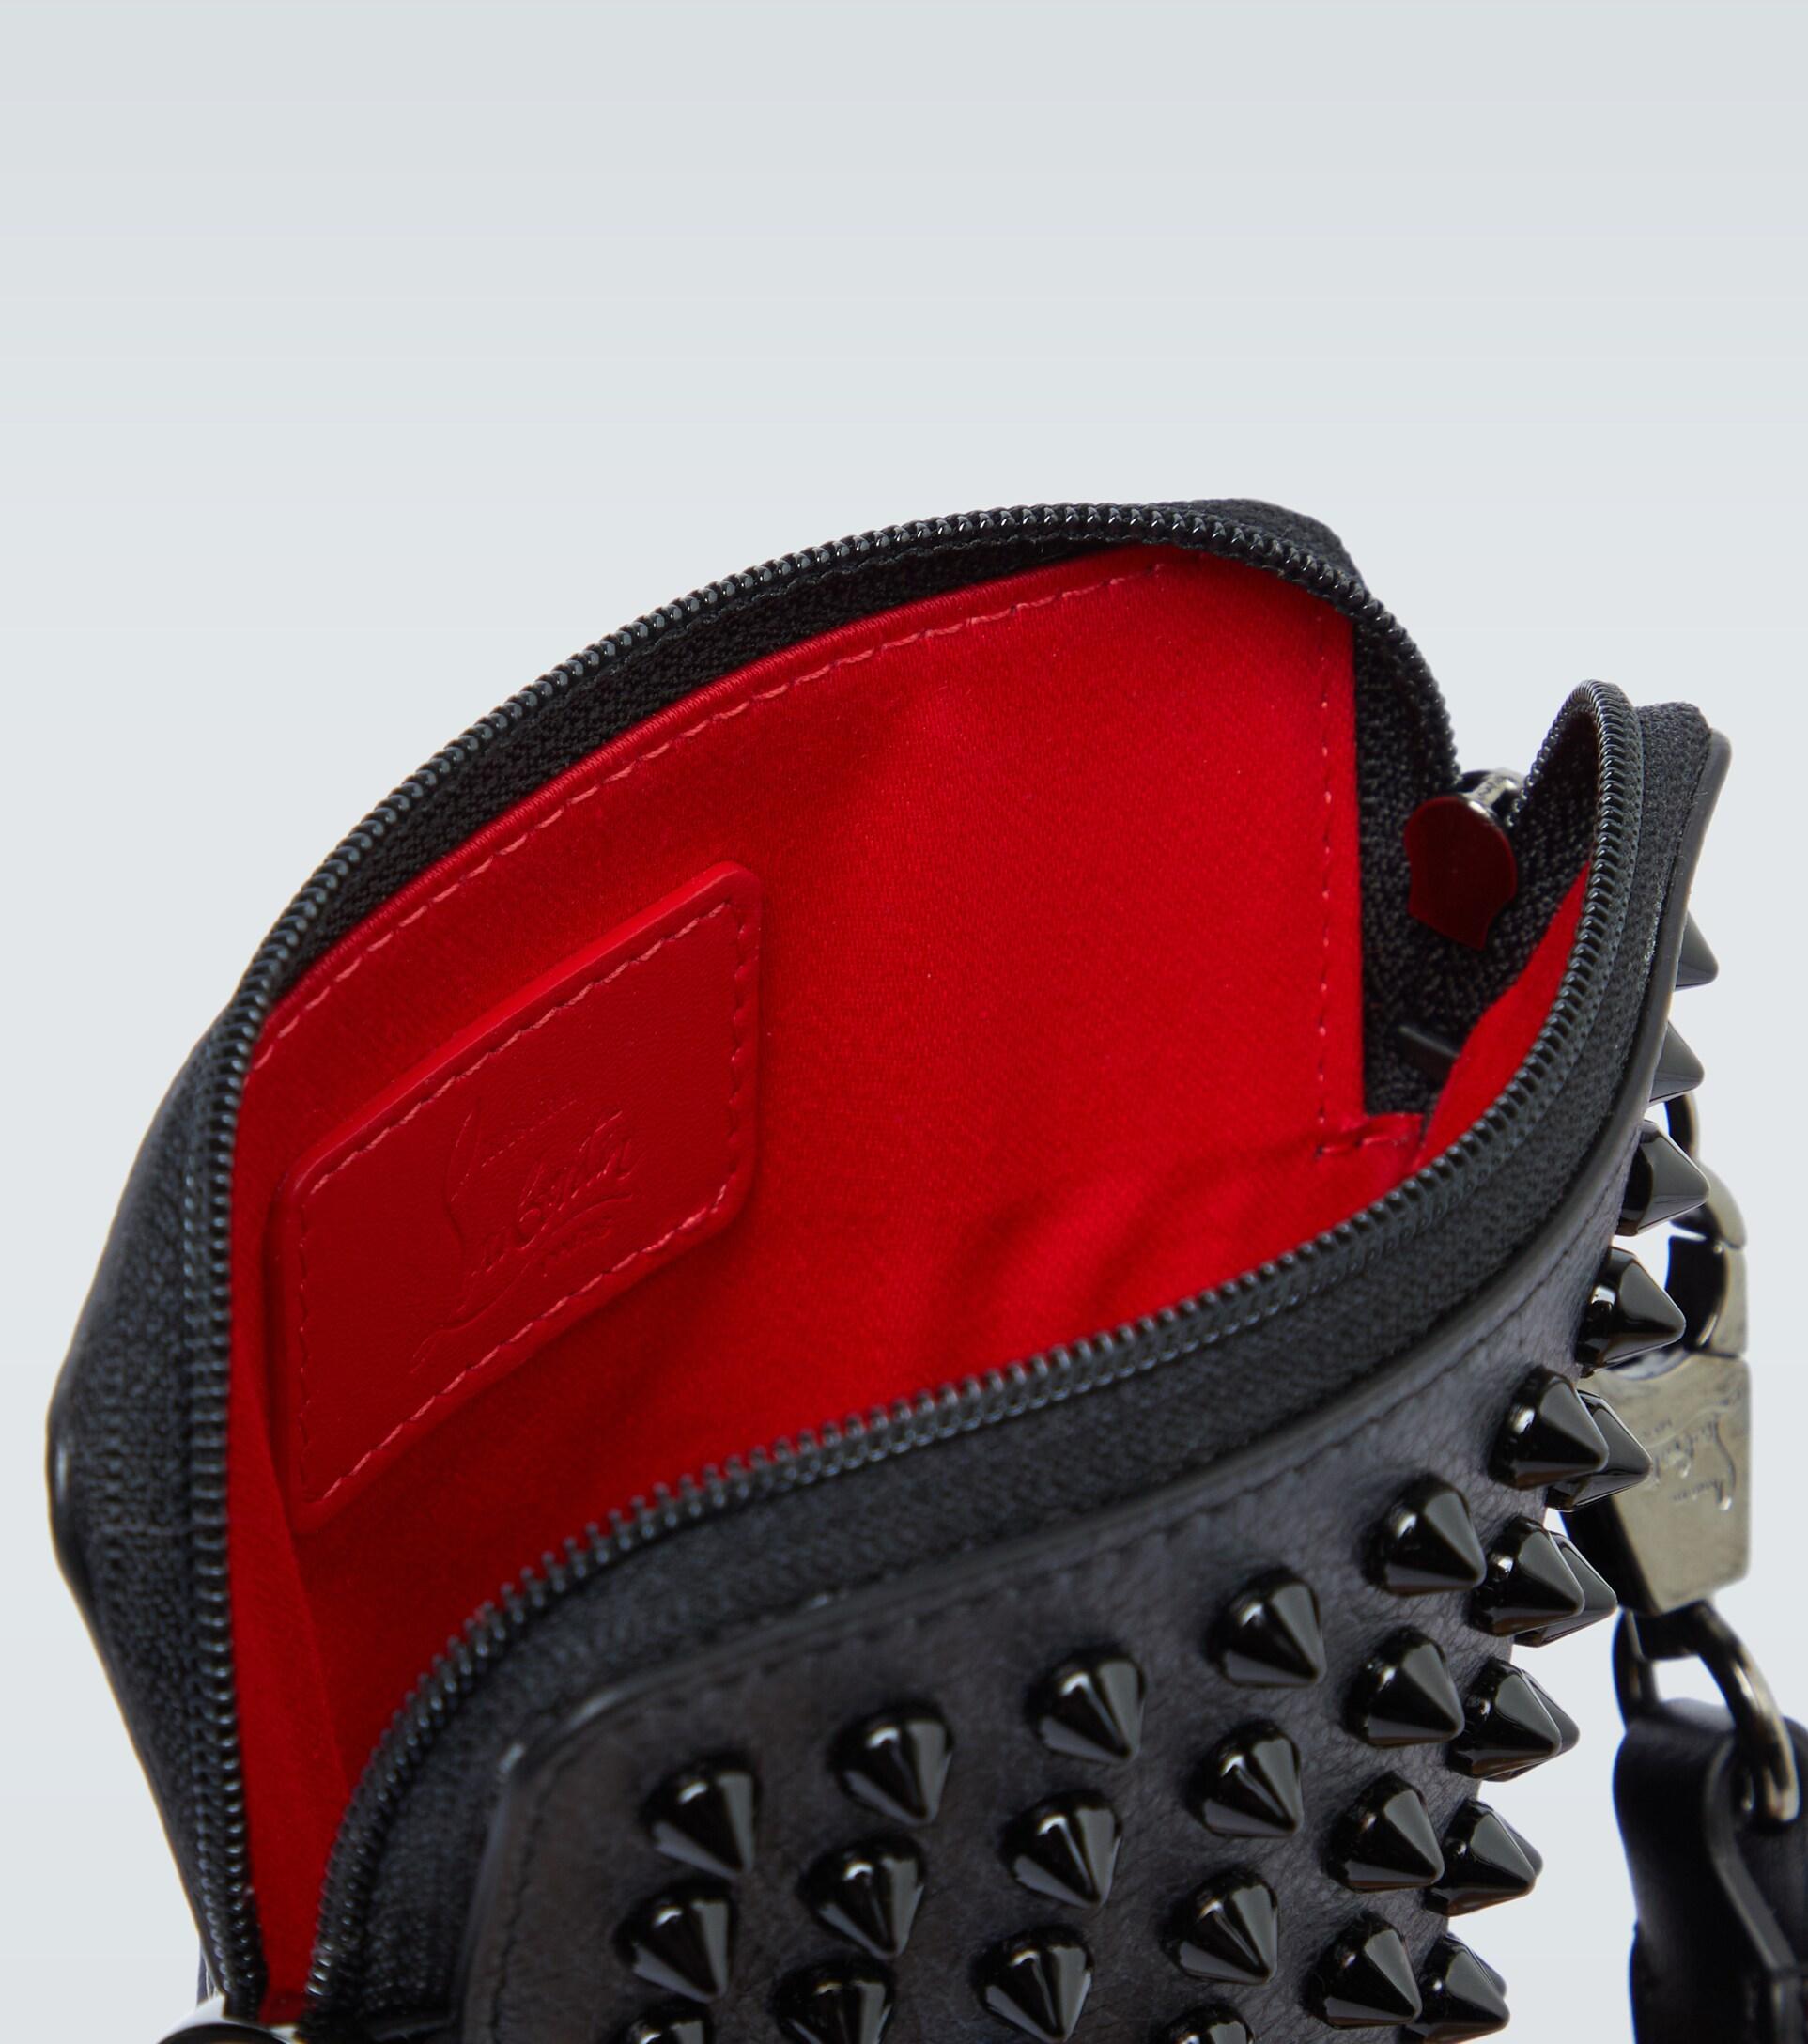 VALENTINO Rockstud Spike Nappa Leather Crossbody Clutch Bag - Poudre